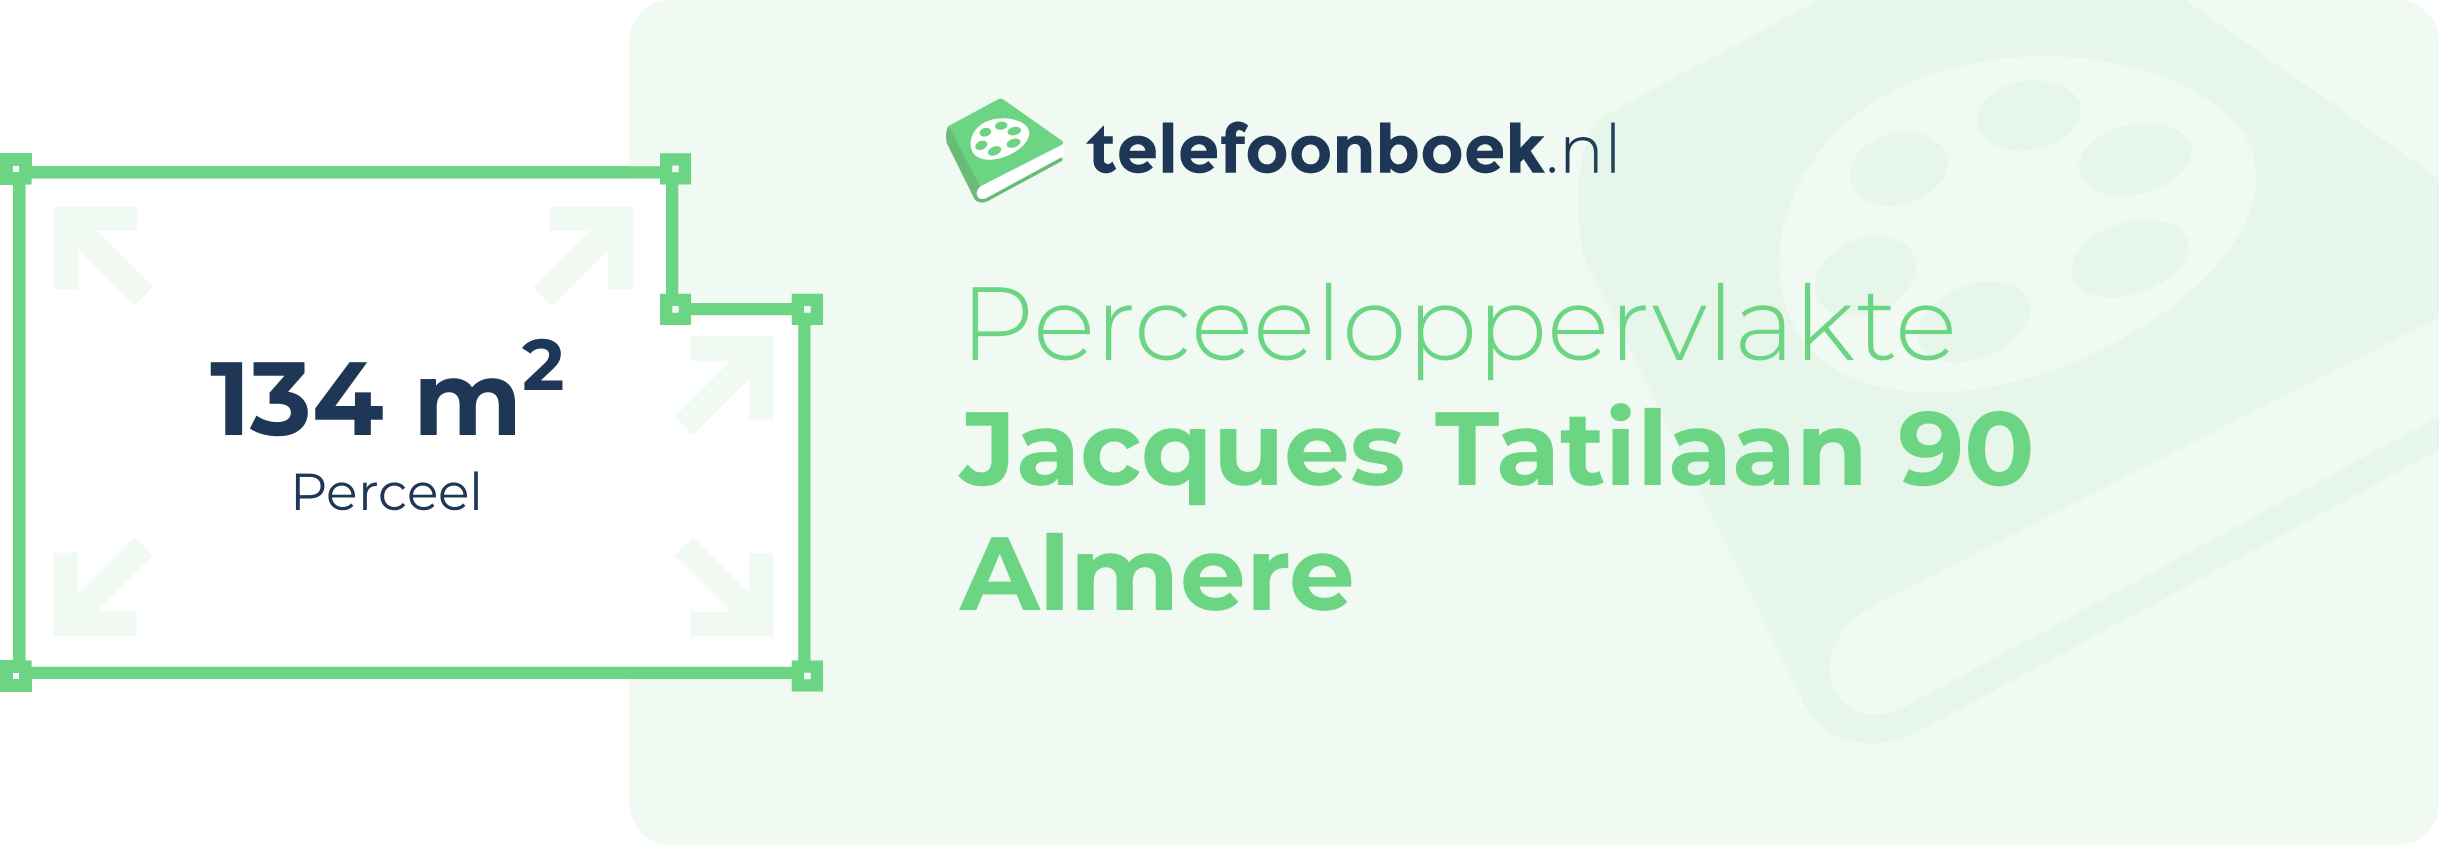 Perceeloppervlakte Jacques Tatilaan 90 Almere